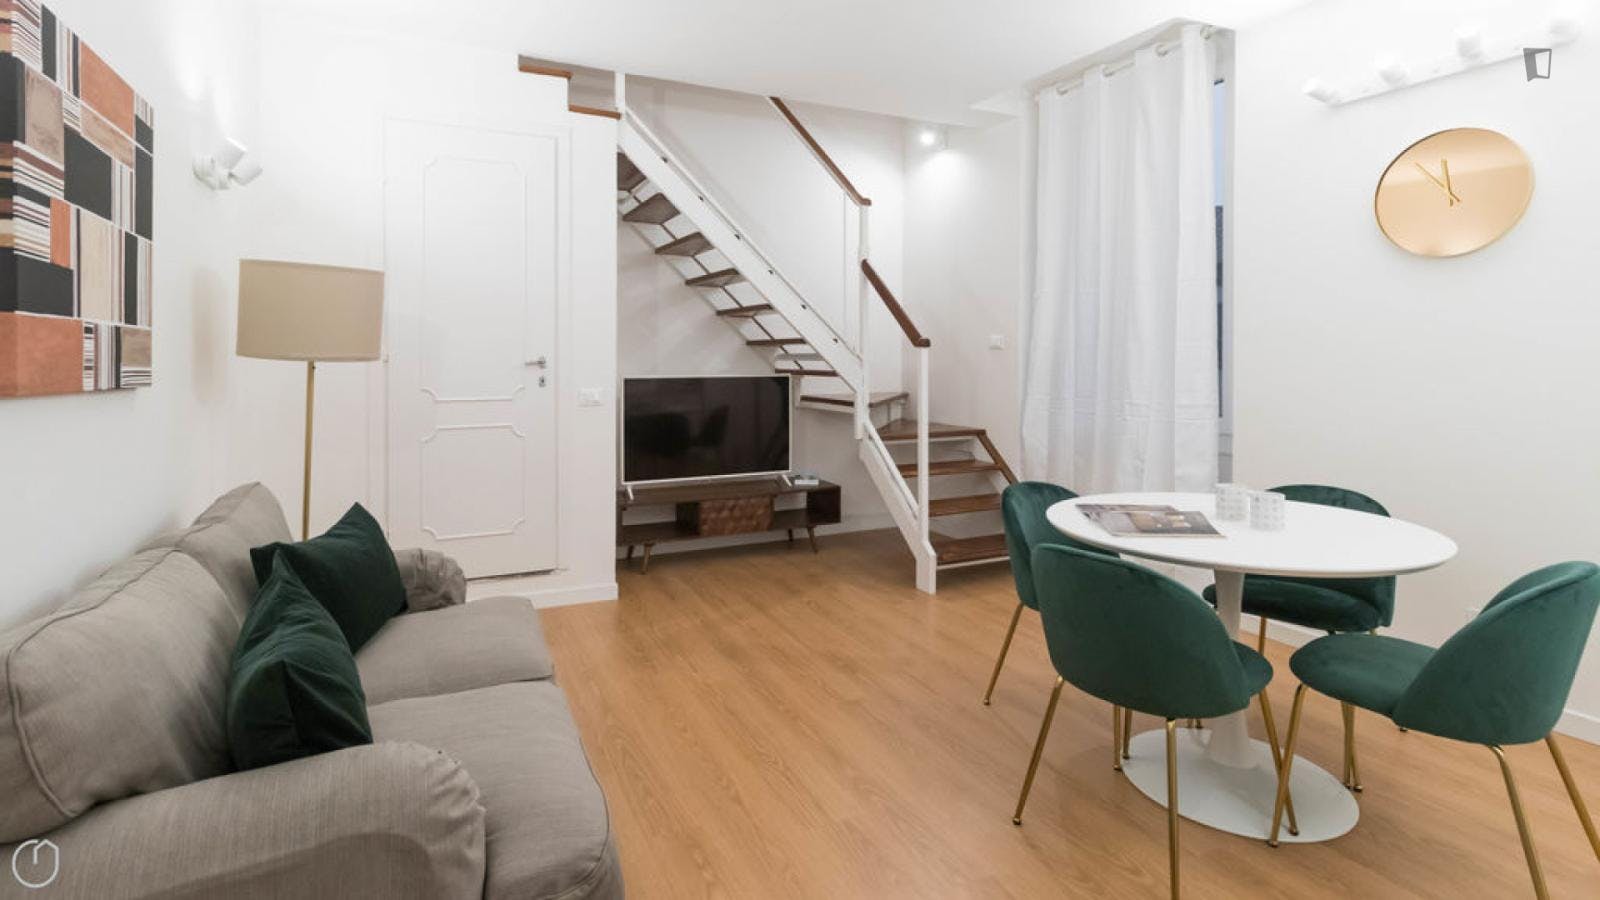 Appealing 2-bedroom apartment in Navigli